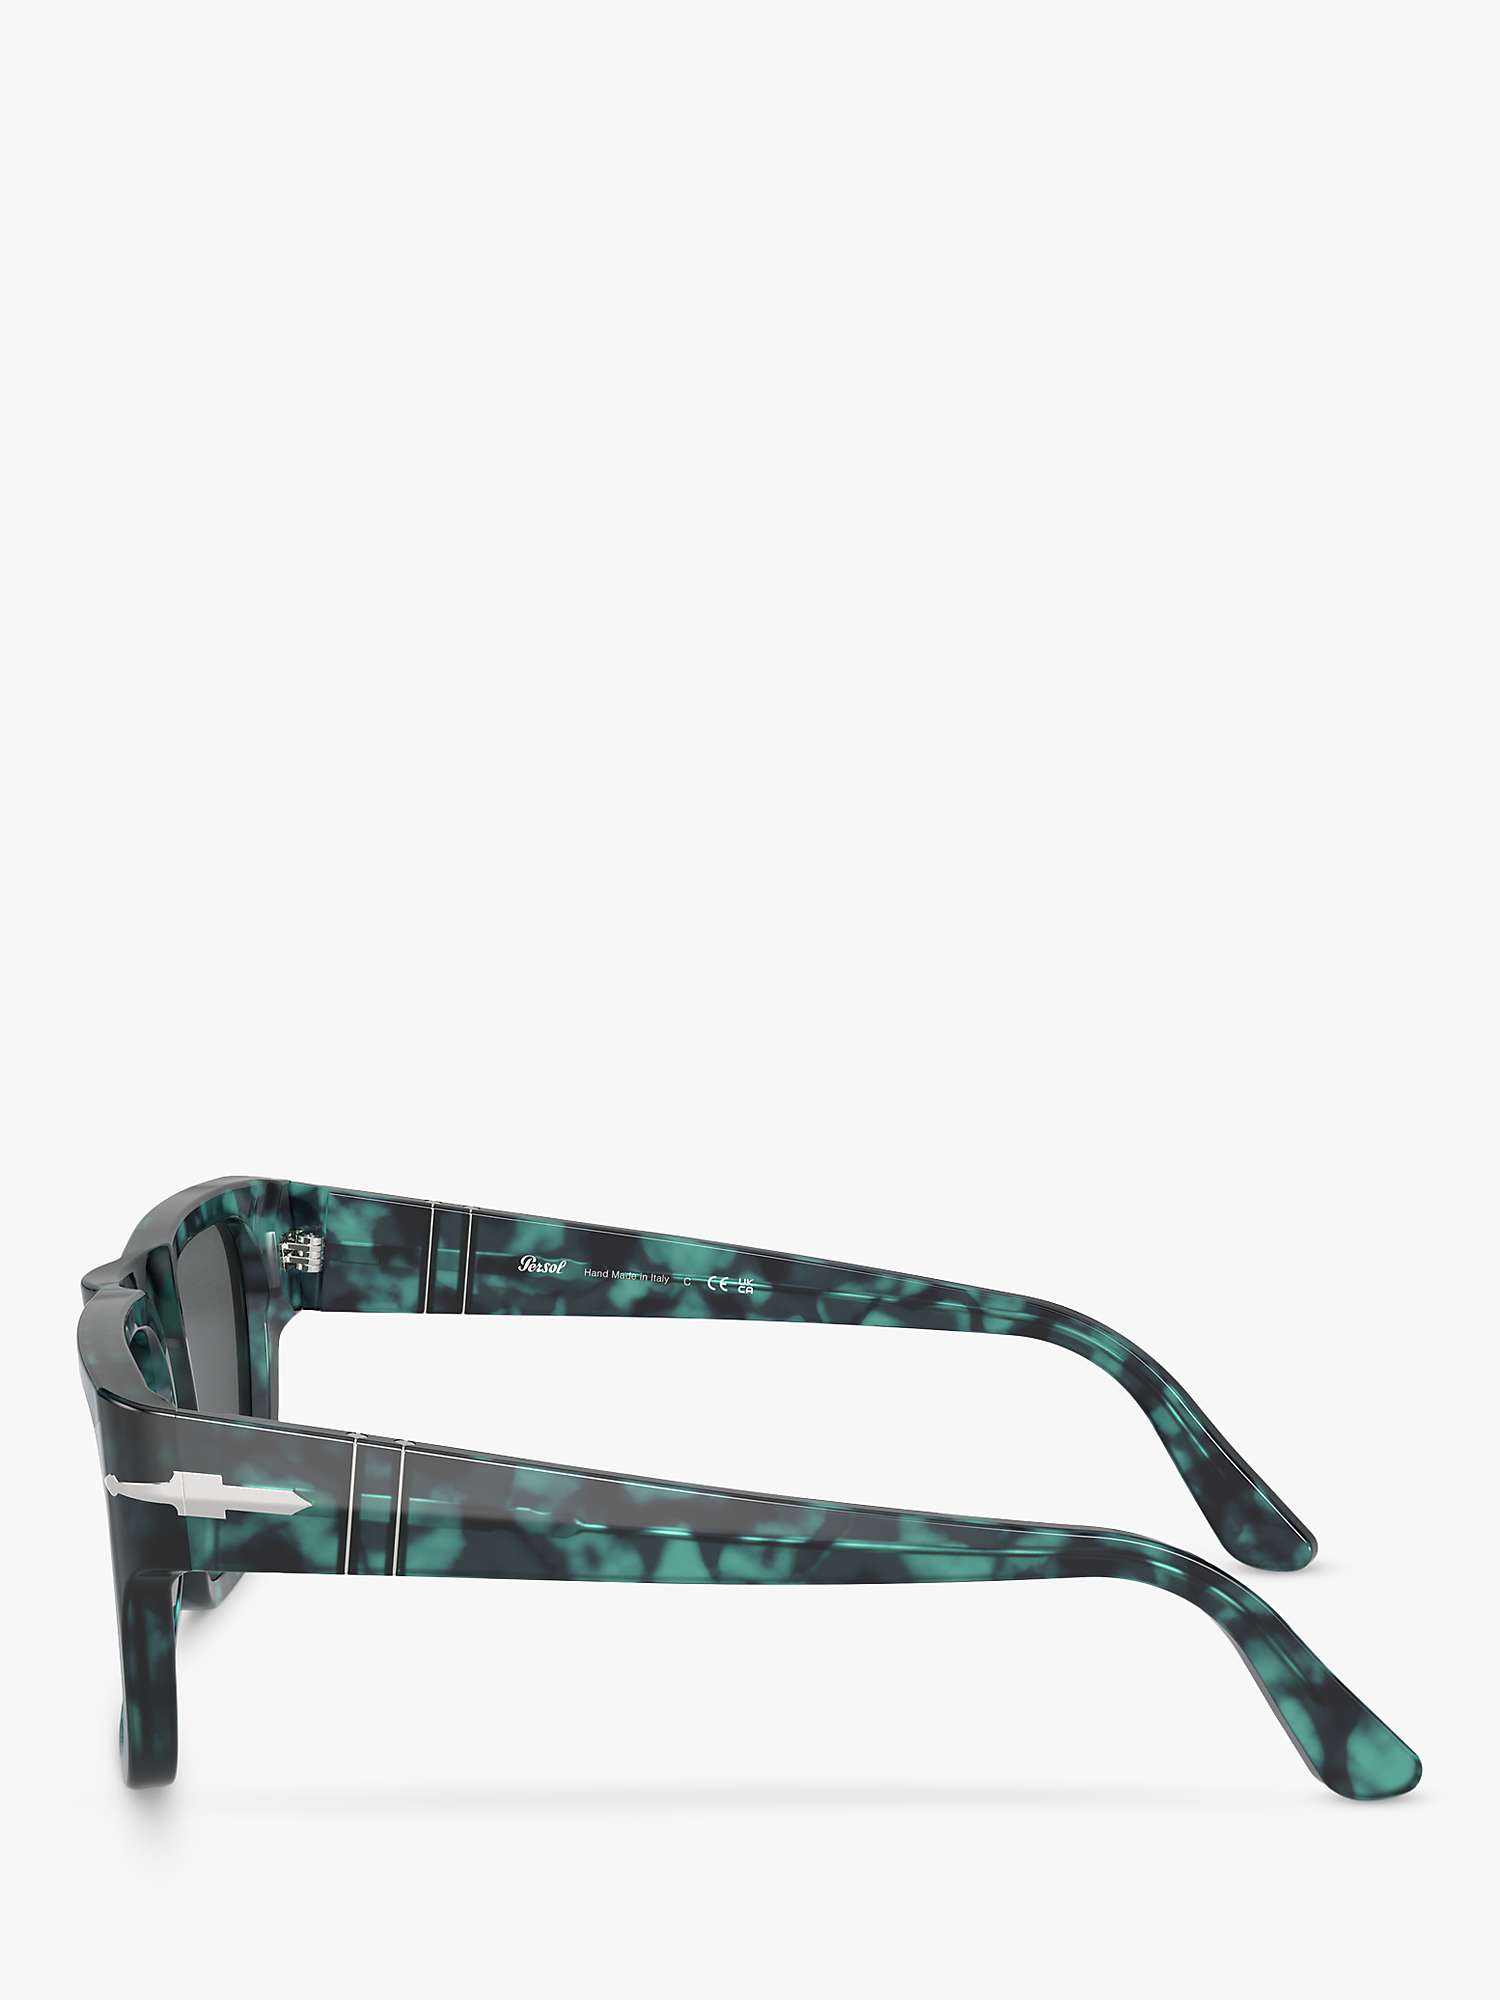 Buy Persol PO3348S Men's D-Frame Sunglasses, Blue Havana/Grey Online at johnlewis.com